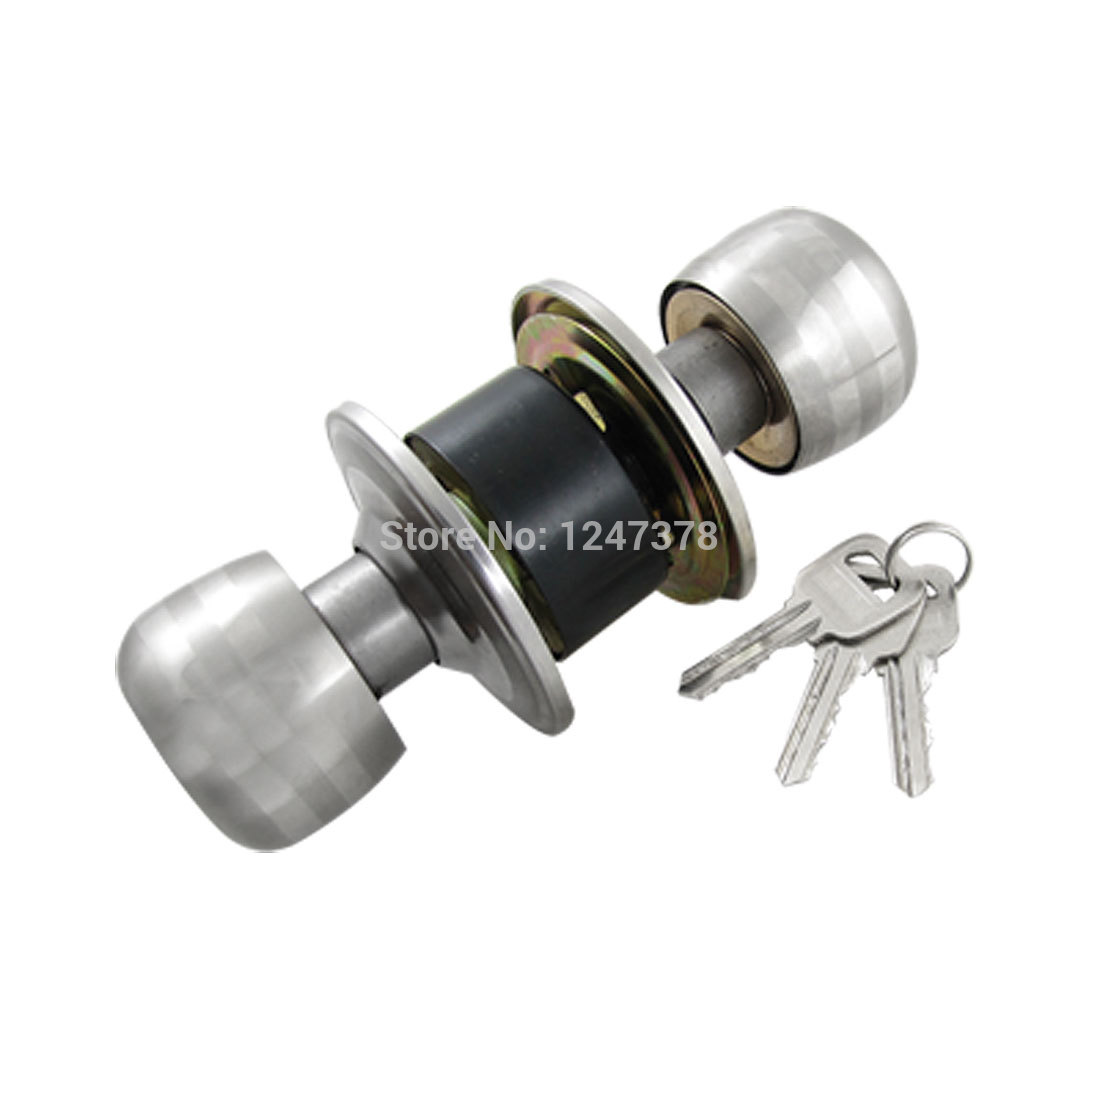 unlock door knob without key photo - 20